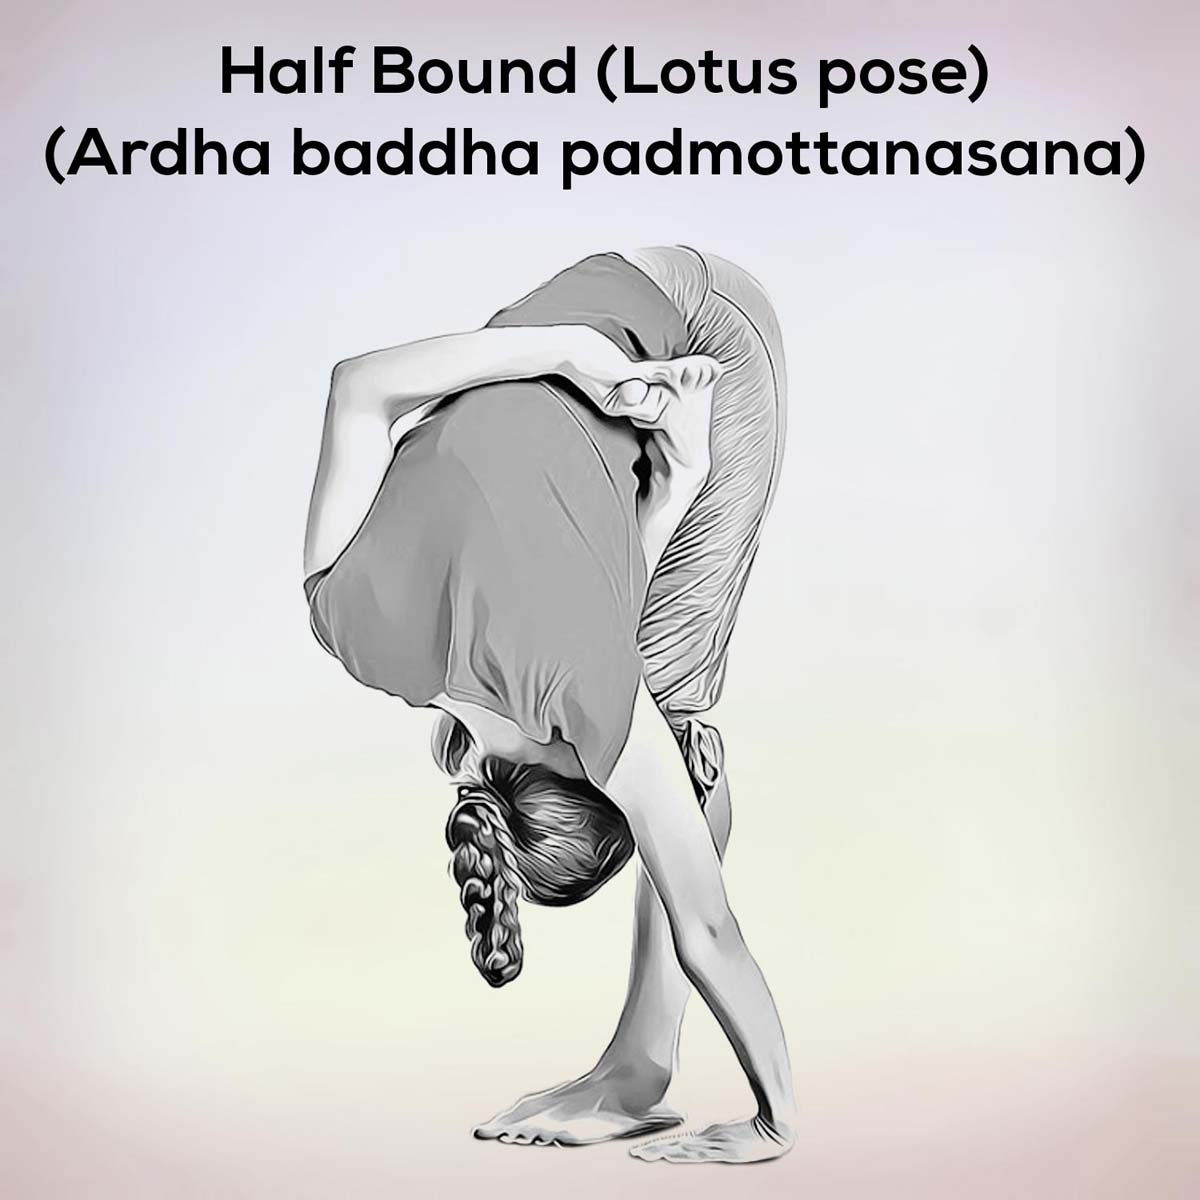 Baddha Padmasana (Locked Lotus Pose) Image, Steps, Benefits & More | Easy  yoga workouts, Learn yoga poses, Lotus pose